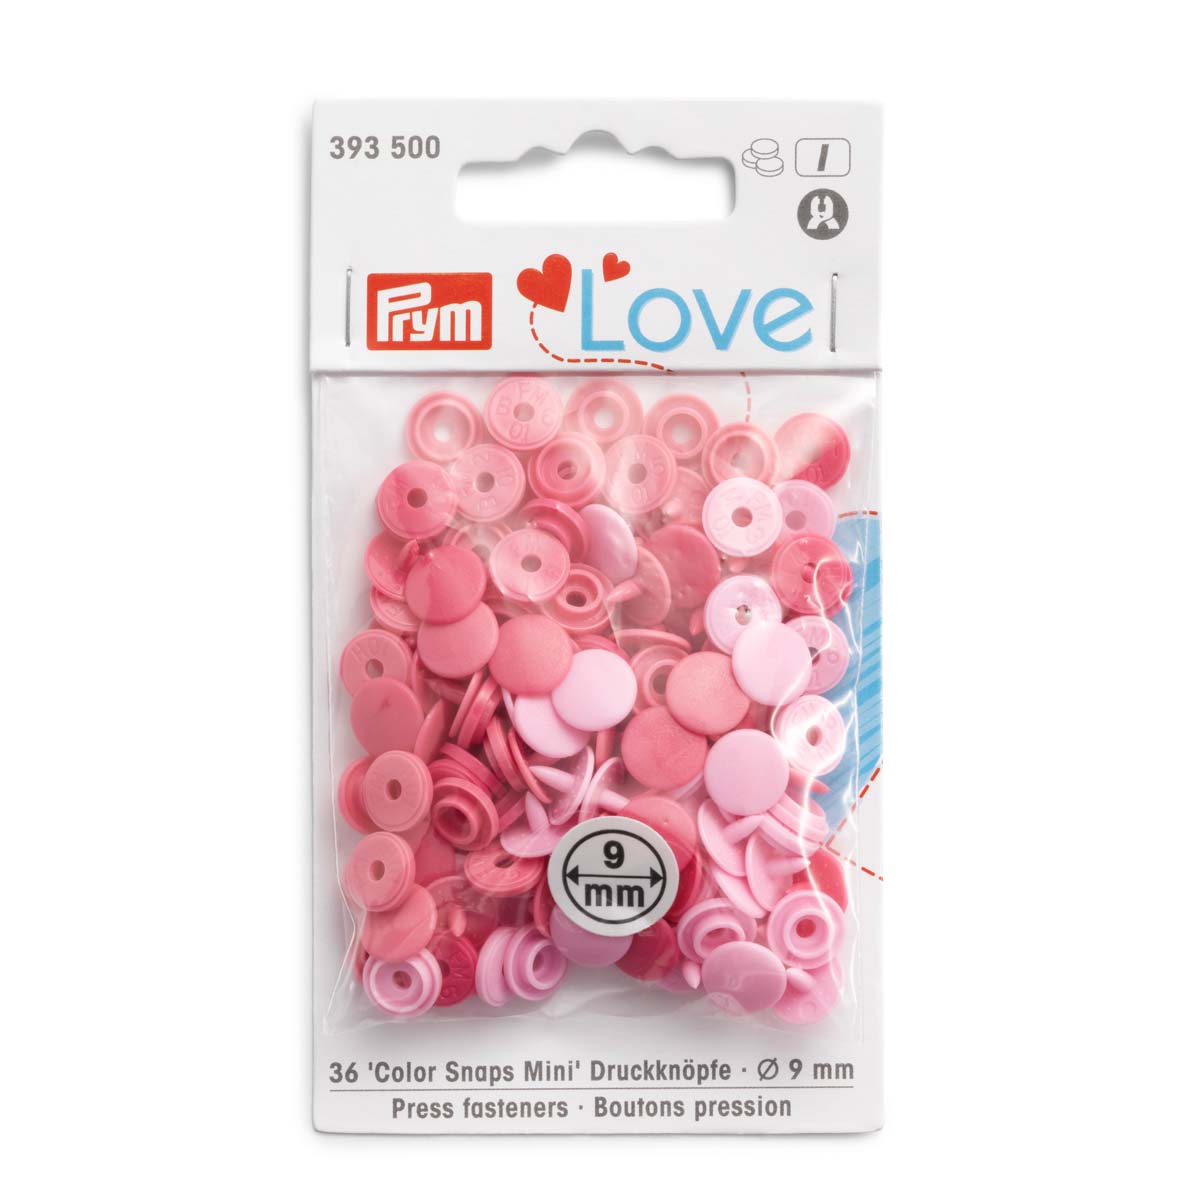 393500 Kнопки Color Snaps Mini PrymLove, розовый цв., 36шт Prym